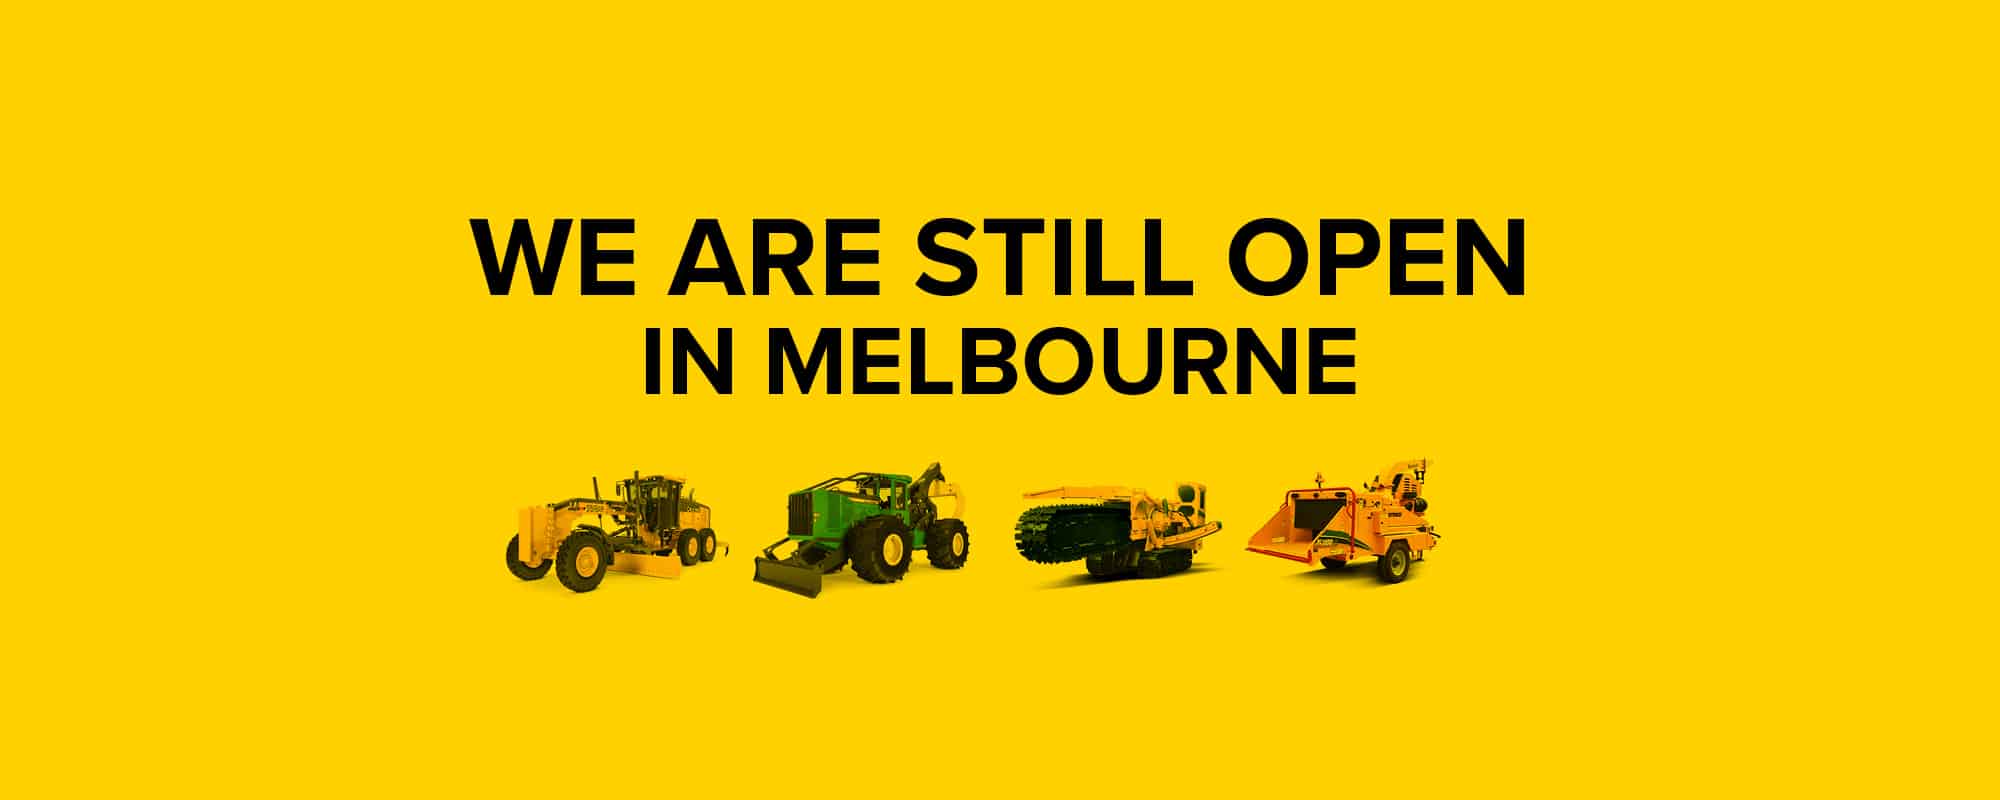 WE ARE STILL OPEN IN MELBOURNE - RDO Equipment